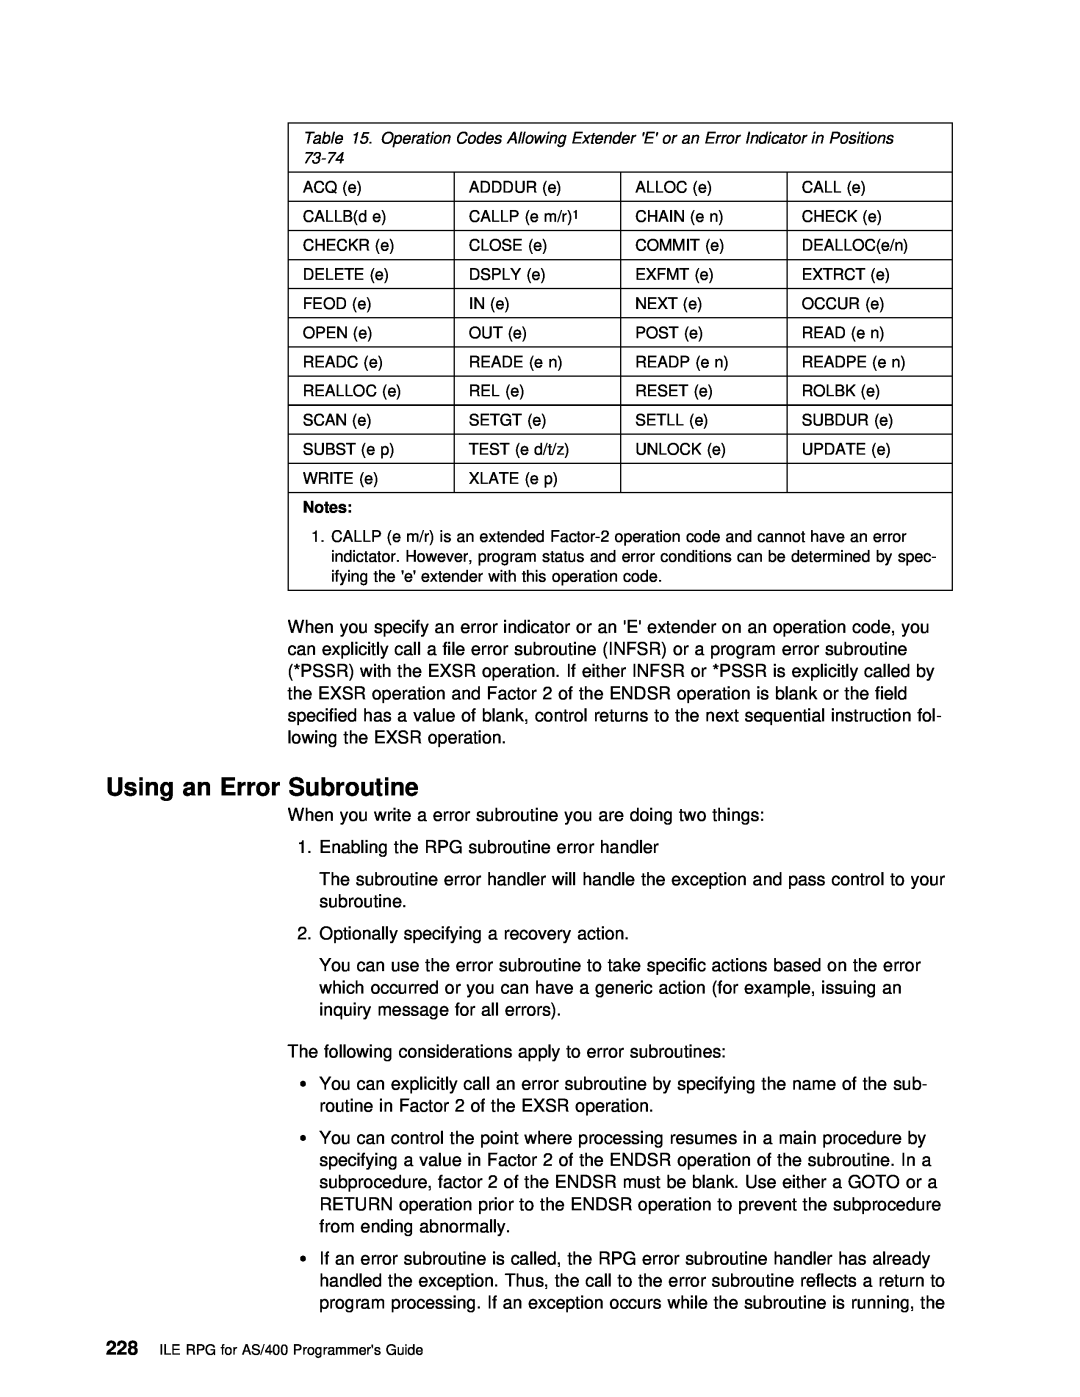 IBM AS/400 manual Using an Error Subroutine, blank 